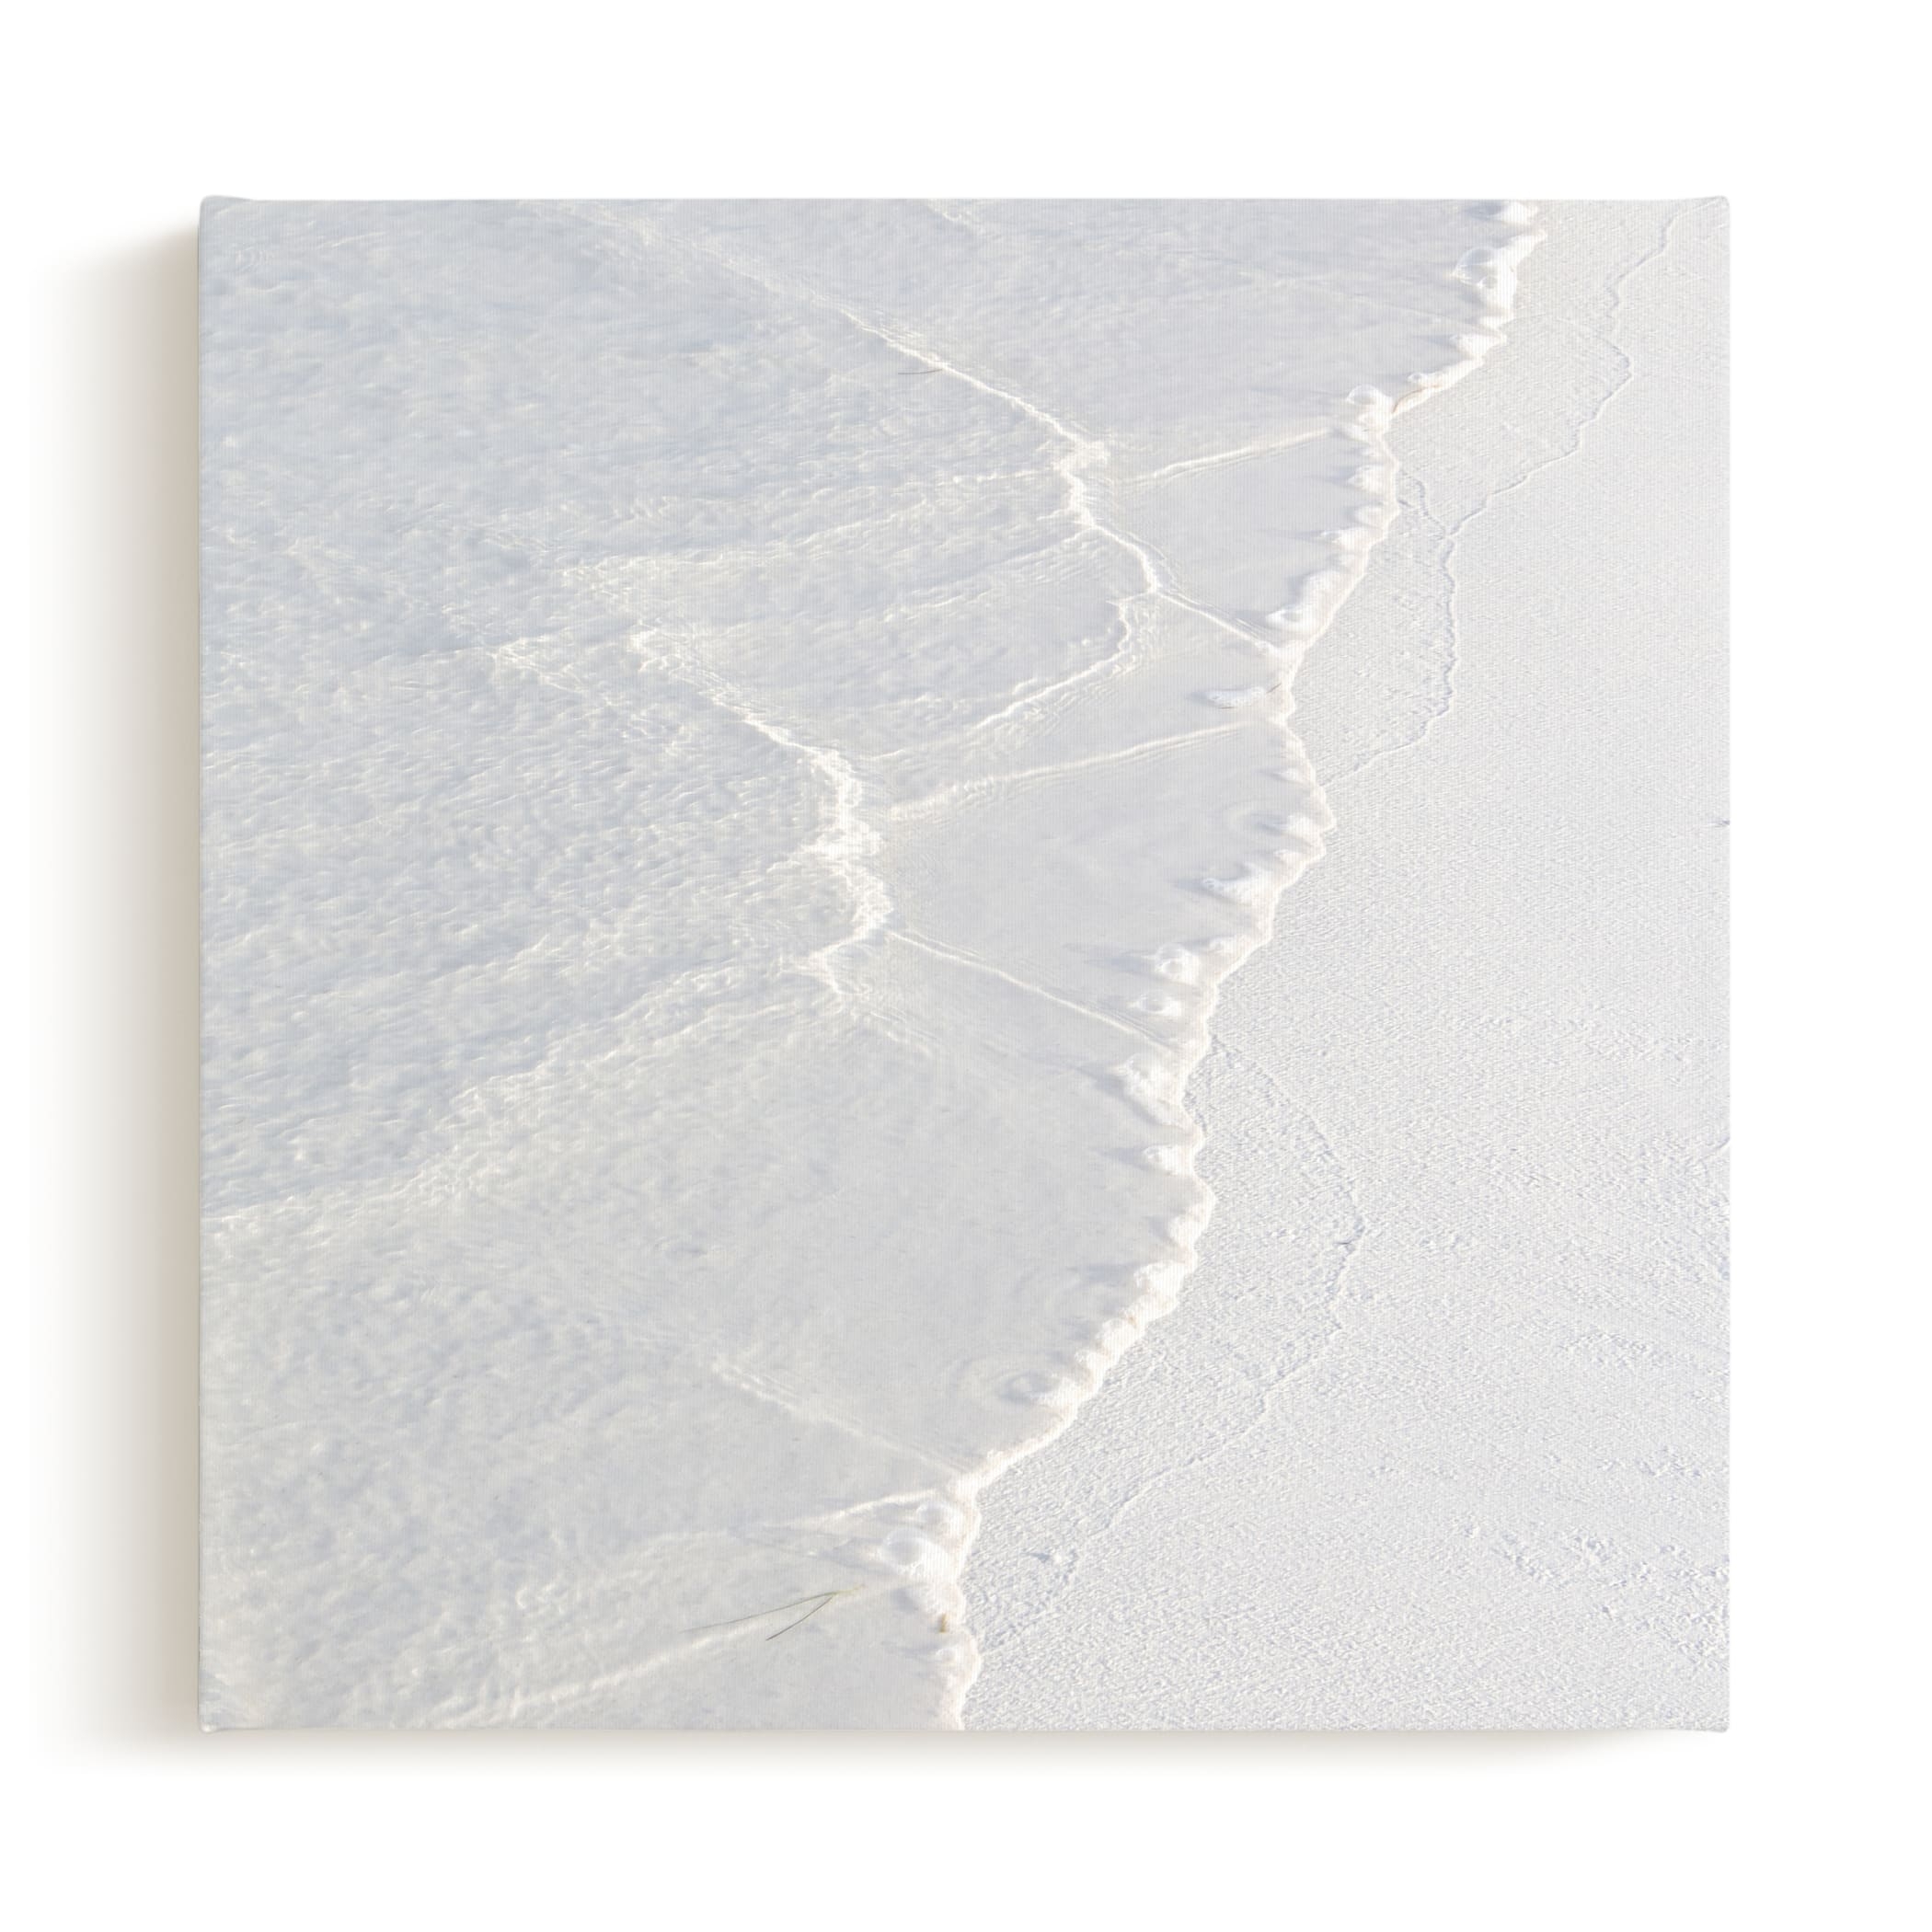 White Water Art Print - Image 0